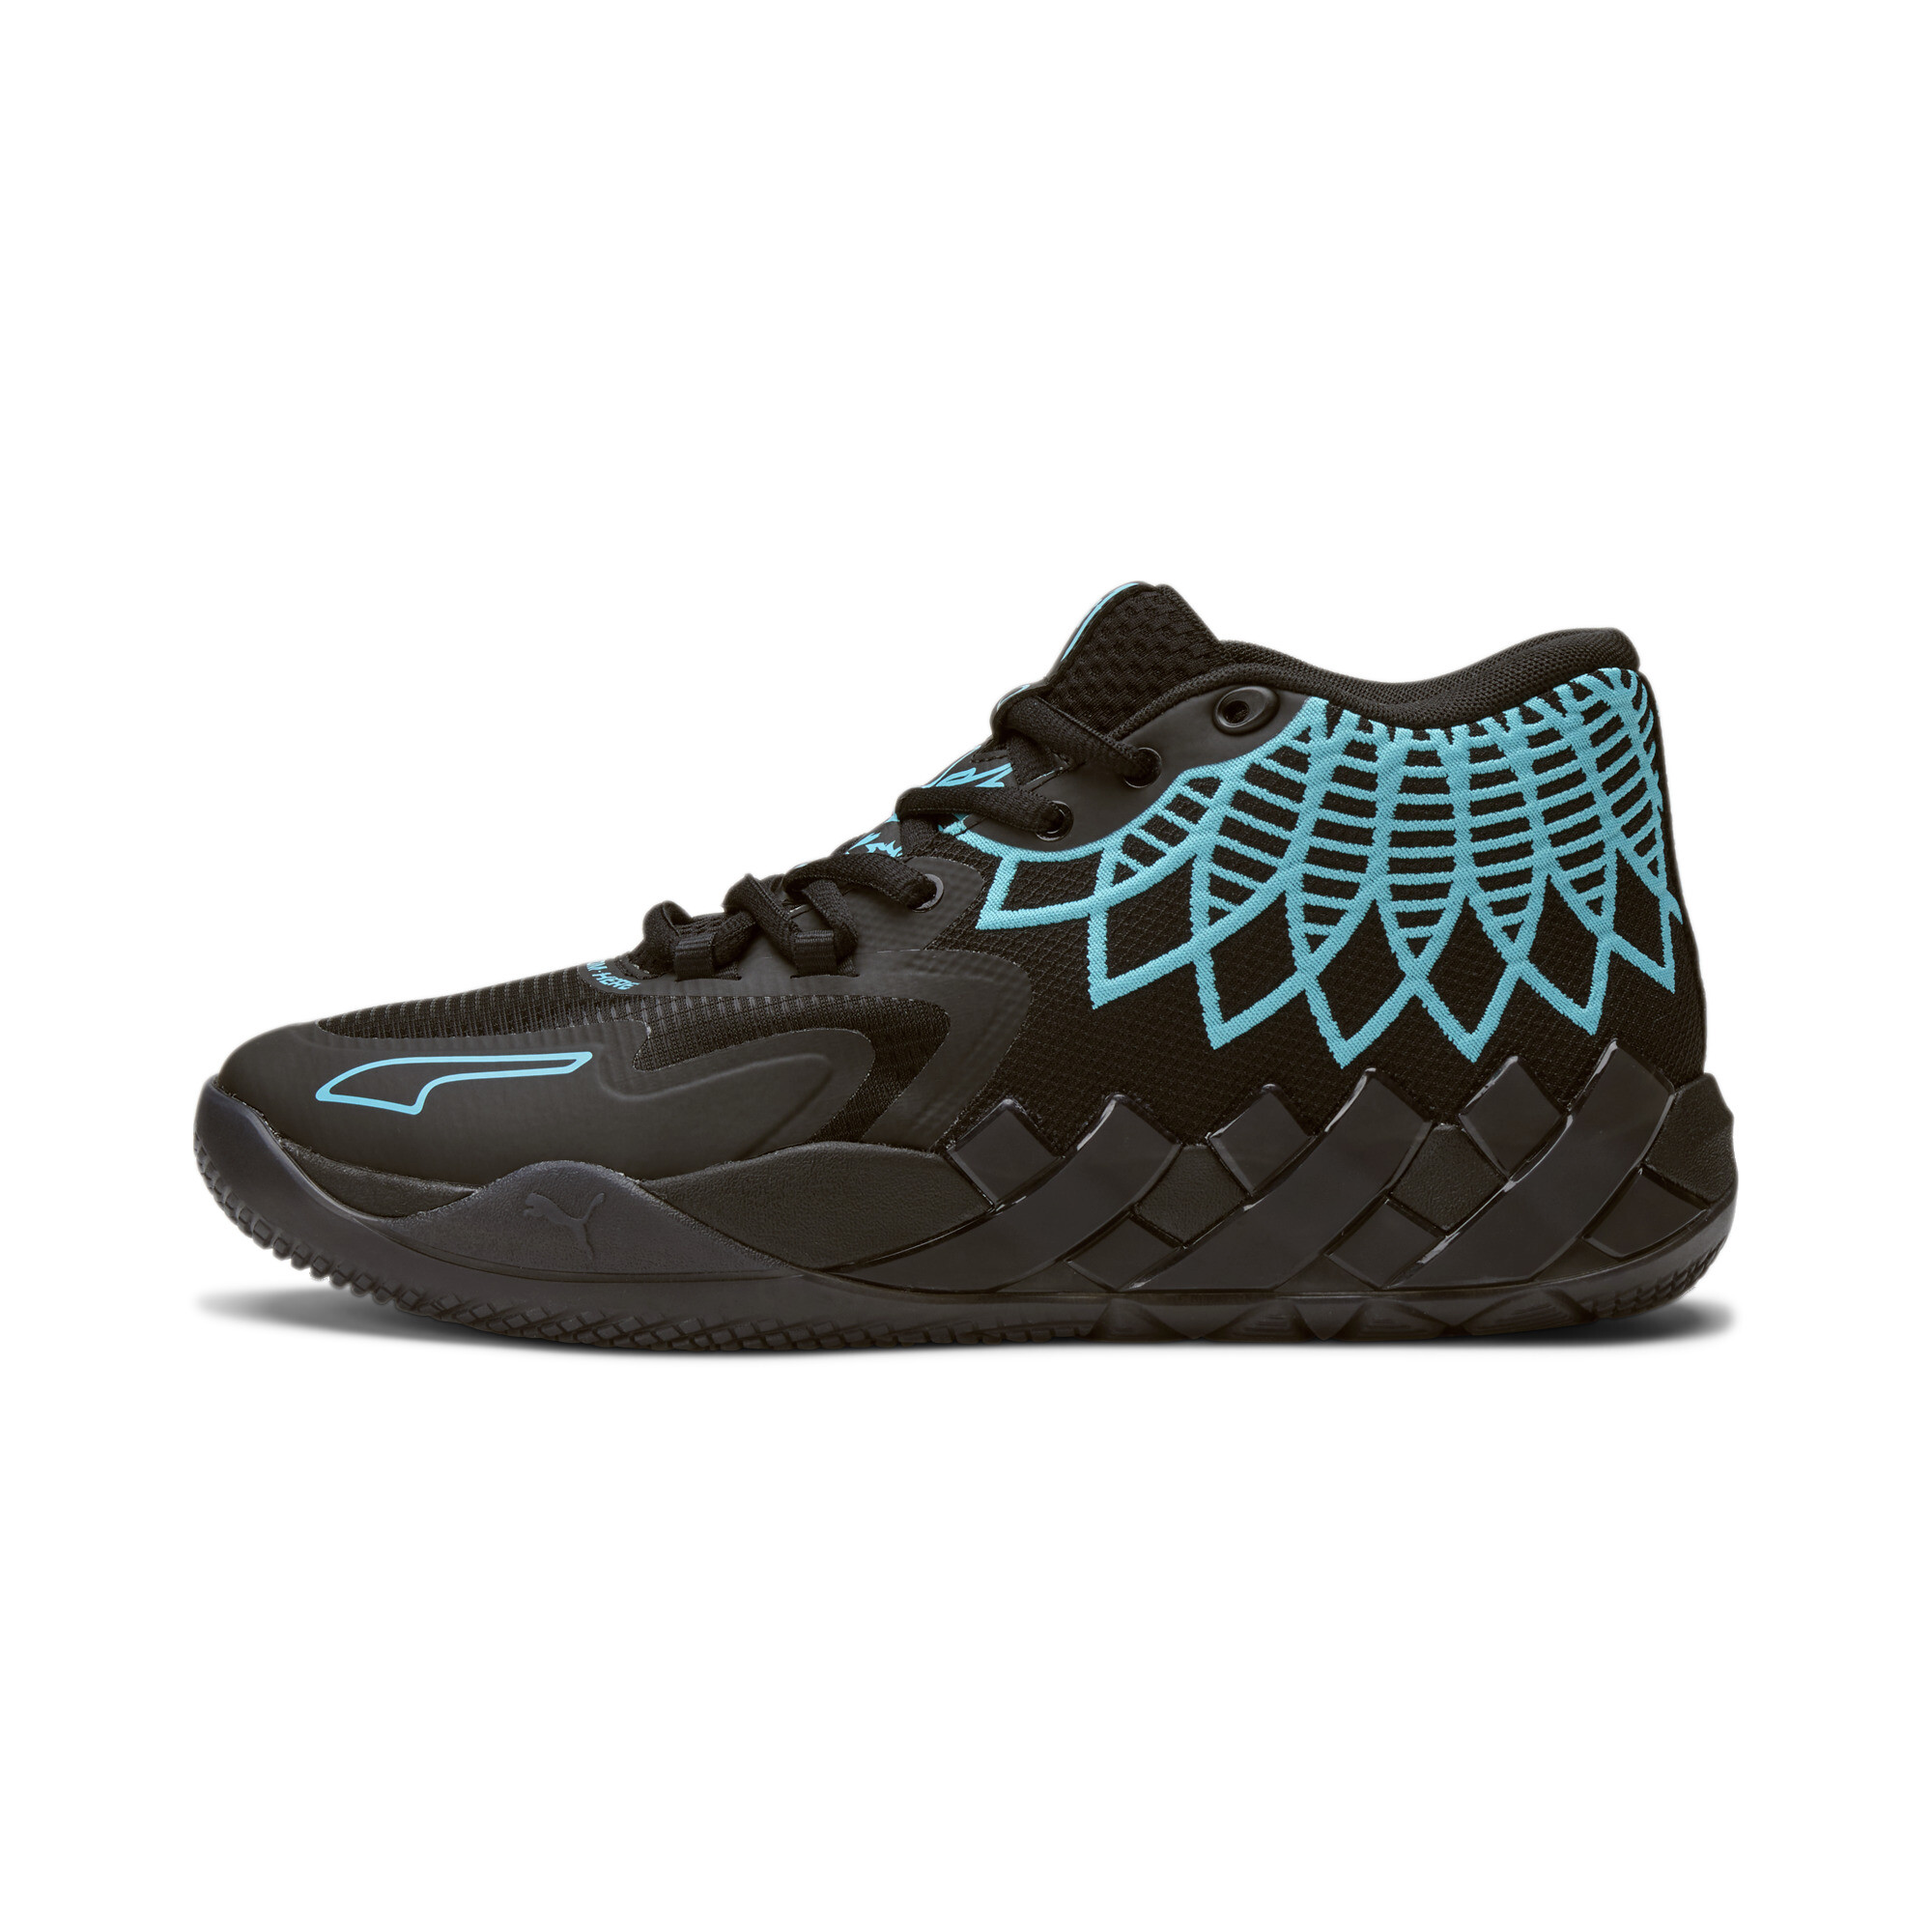 Men's Puma MB.01 Basketball Shoes, Black, Size 37.5, Shoes